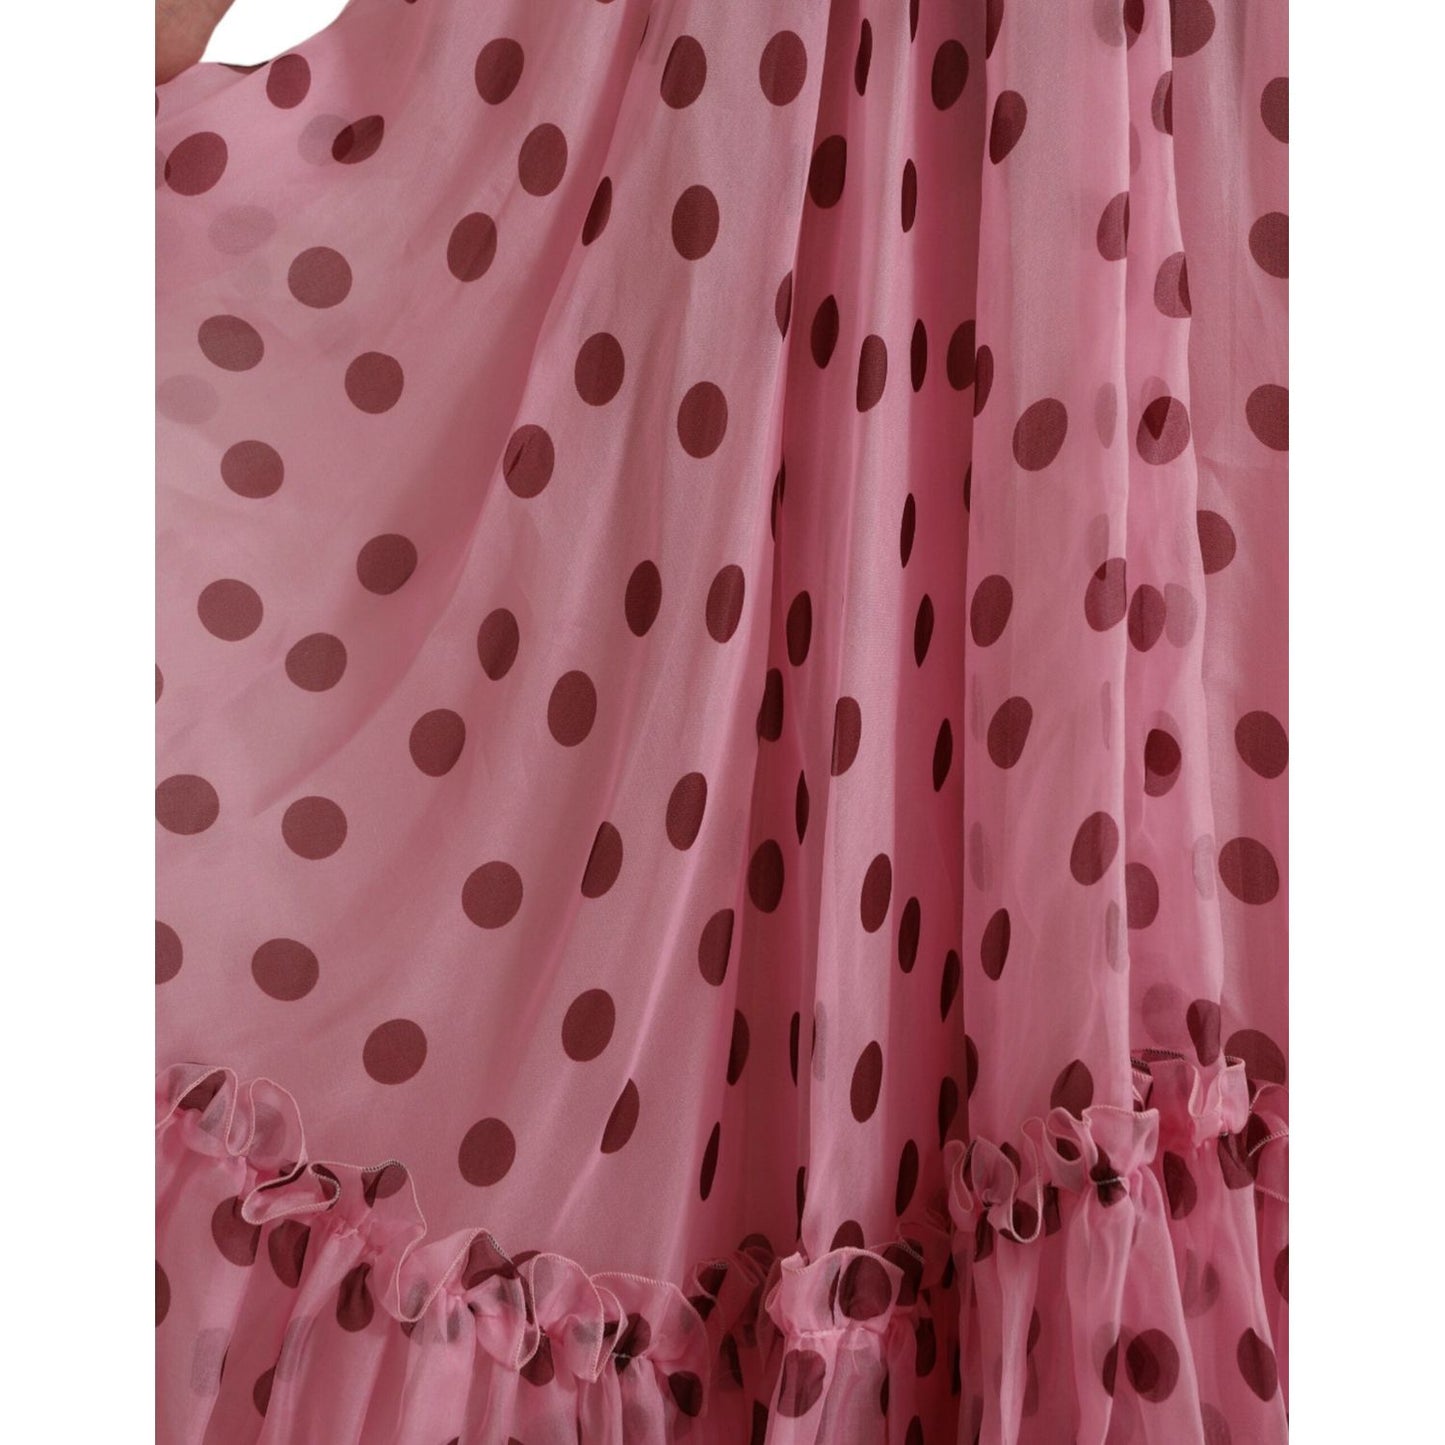 Dolce & Gabbana Chic A-Line Strapless Silk Dress in Pink chic-a-line-strapless-silk-dress-in-pink